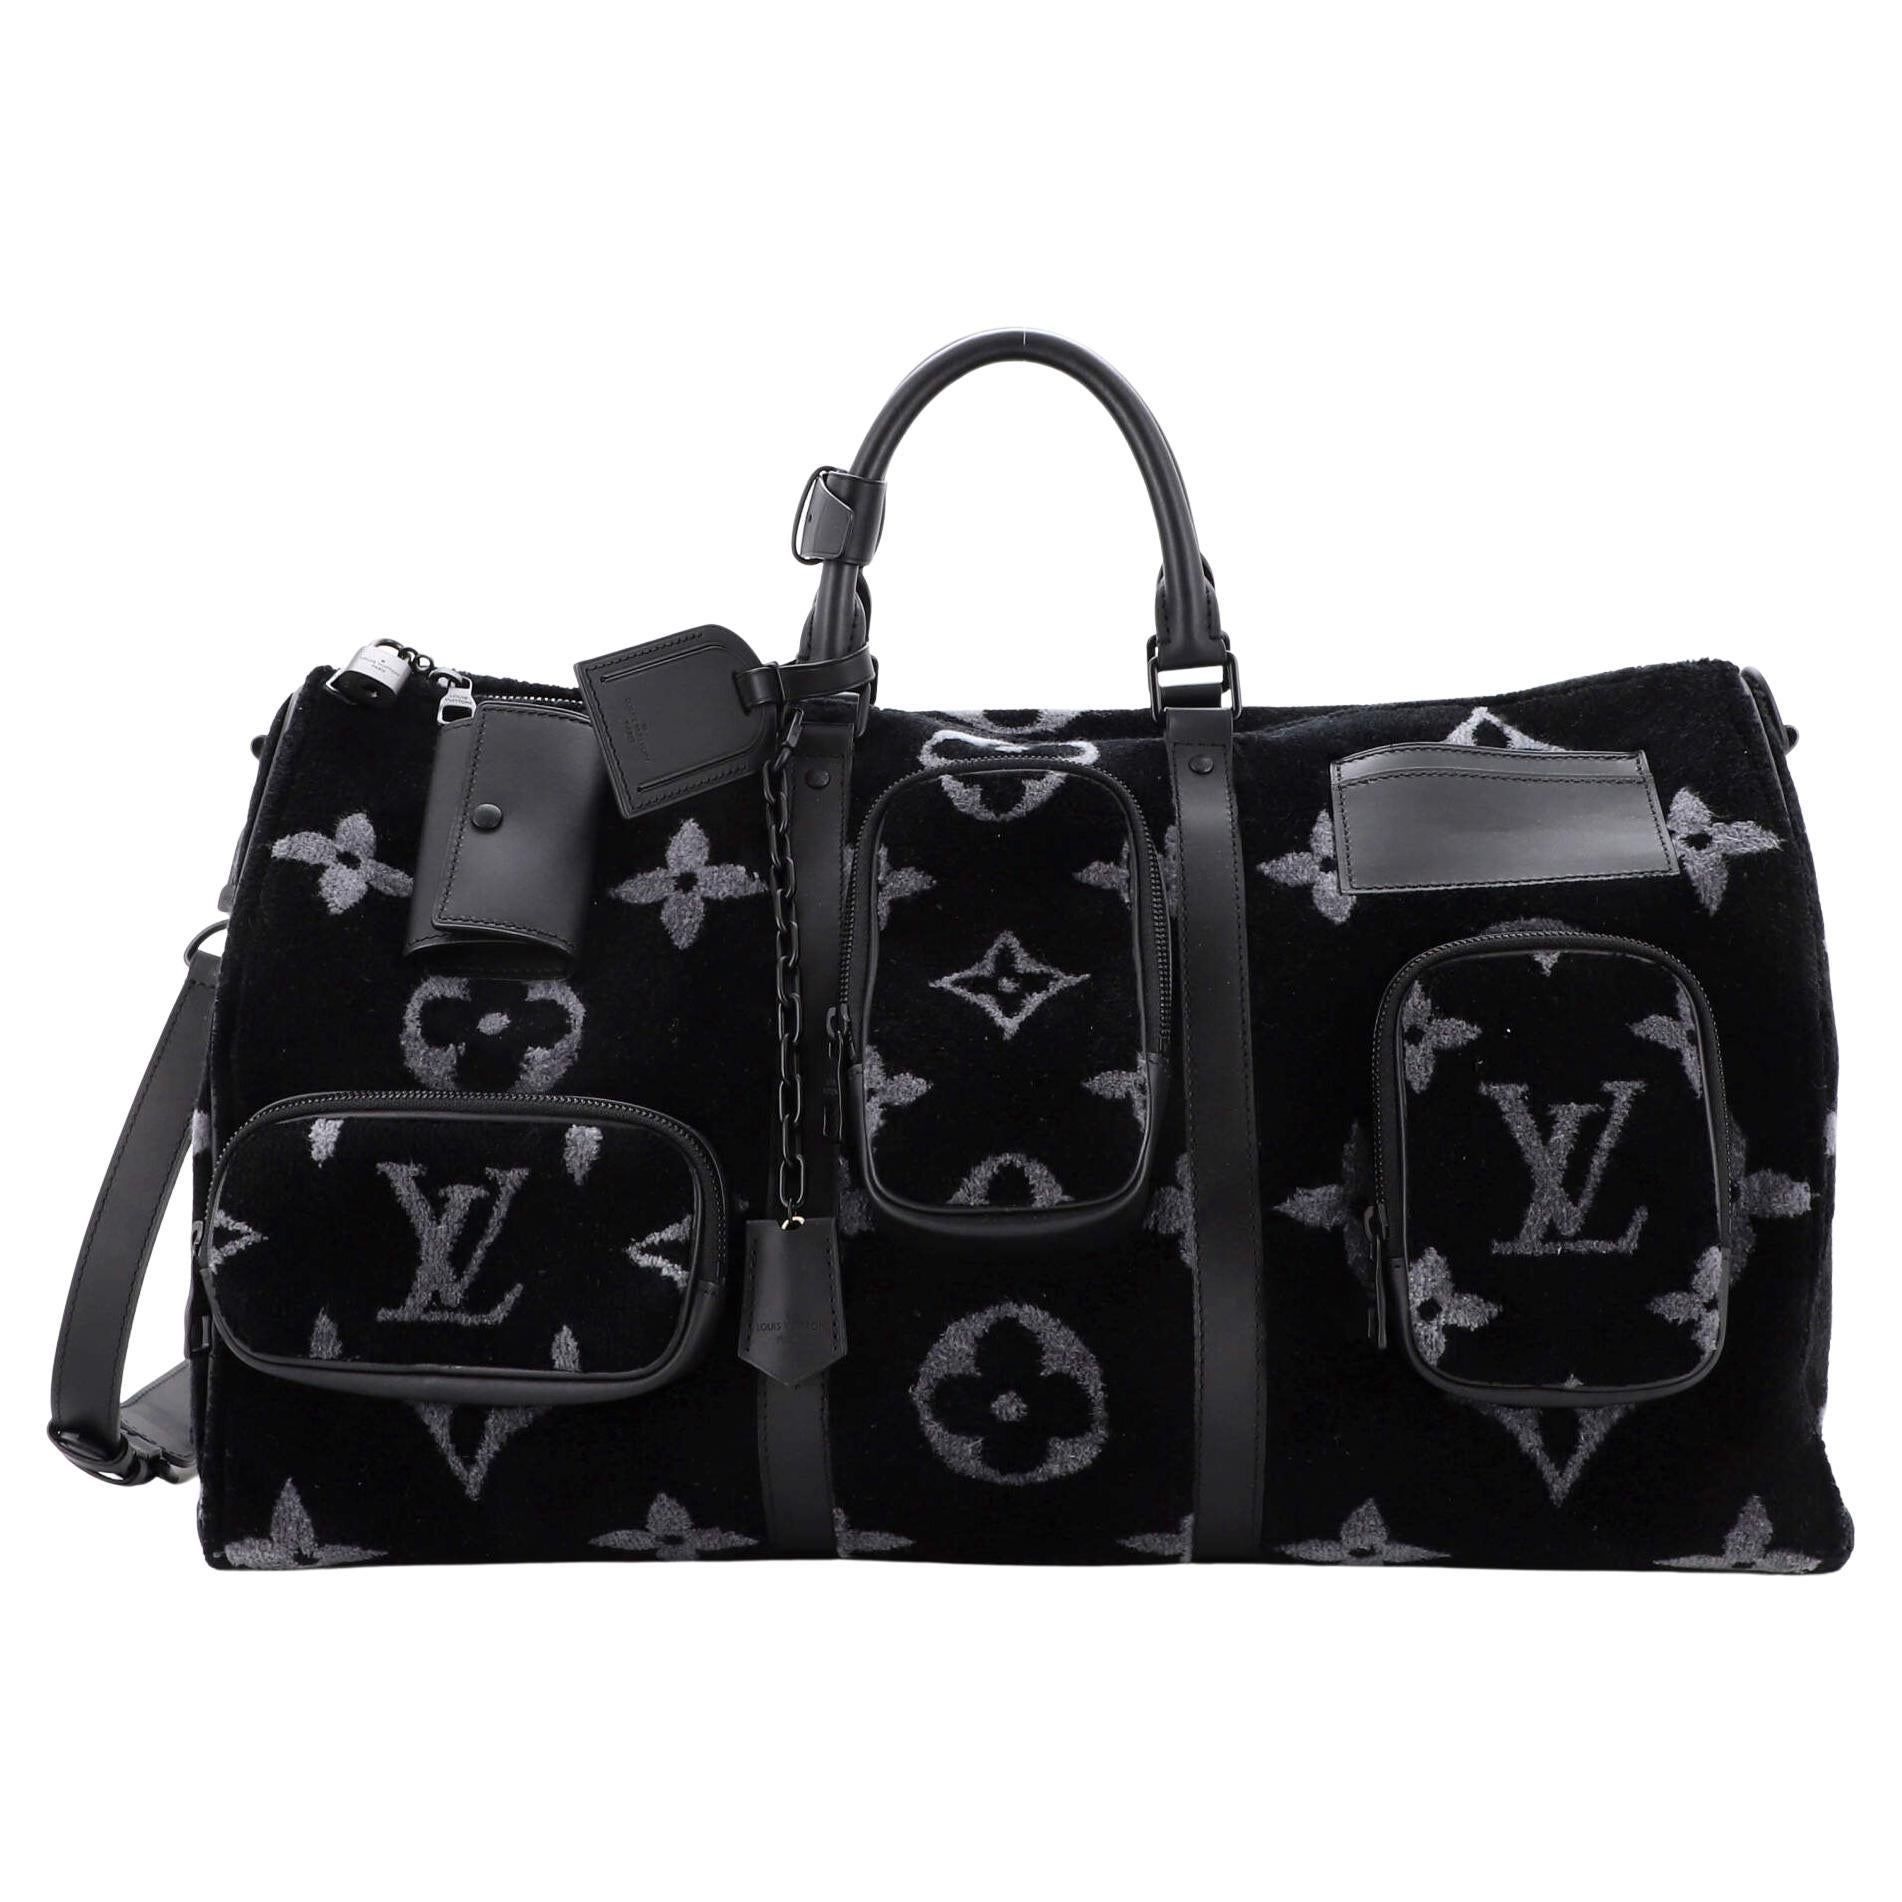 Louis Vuitton Monogram Sac Chien 50 Dog Carrier Pet Bag 41lk518s